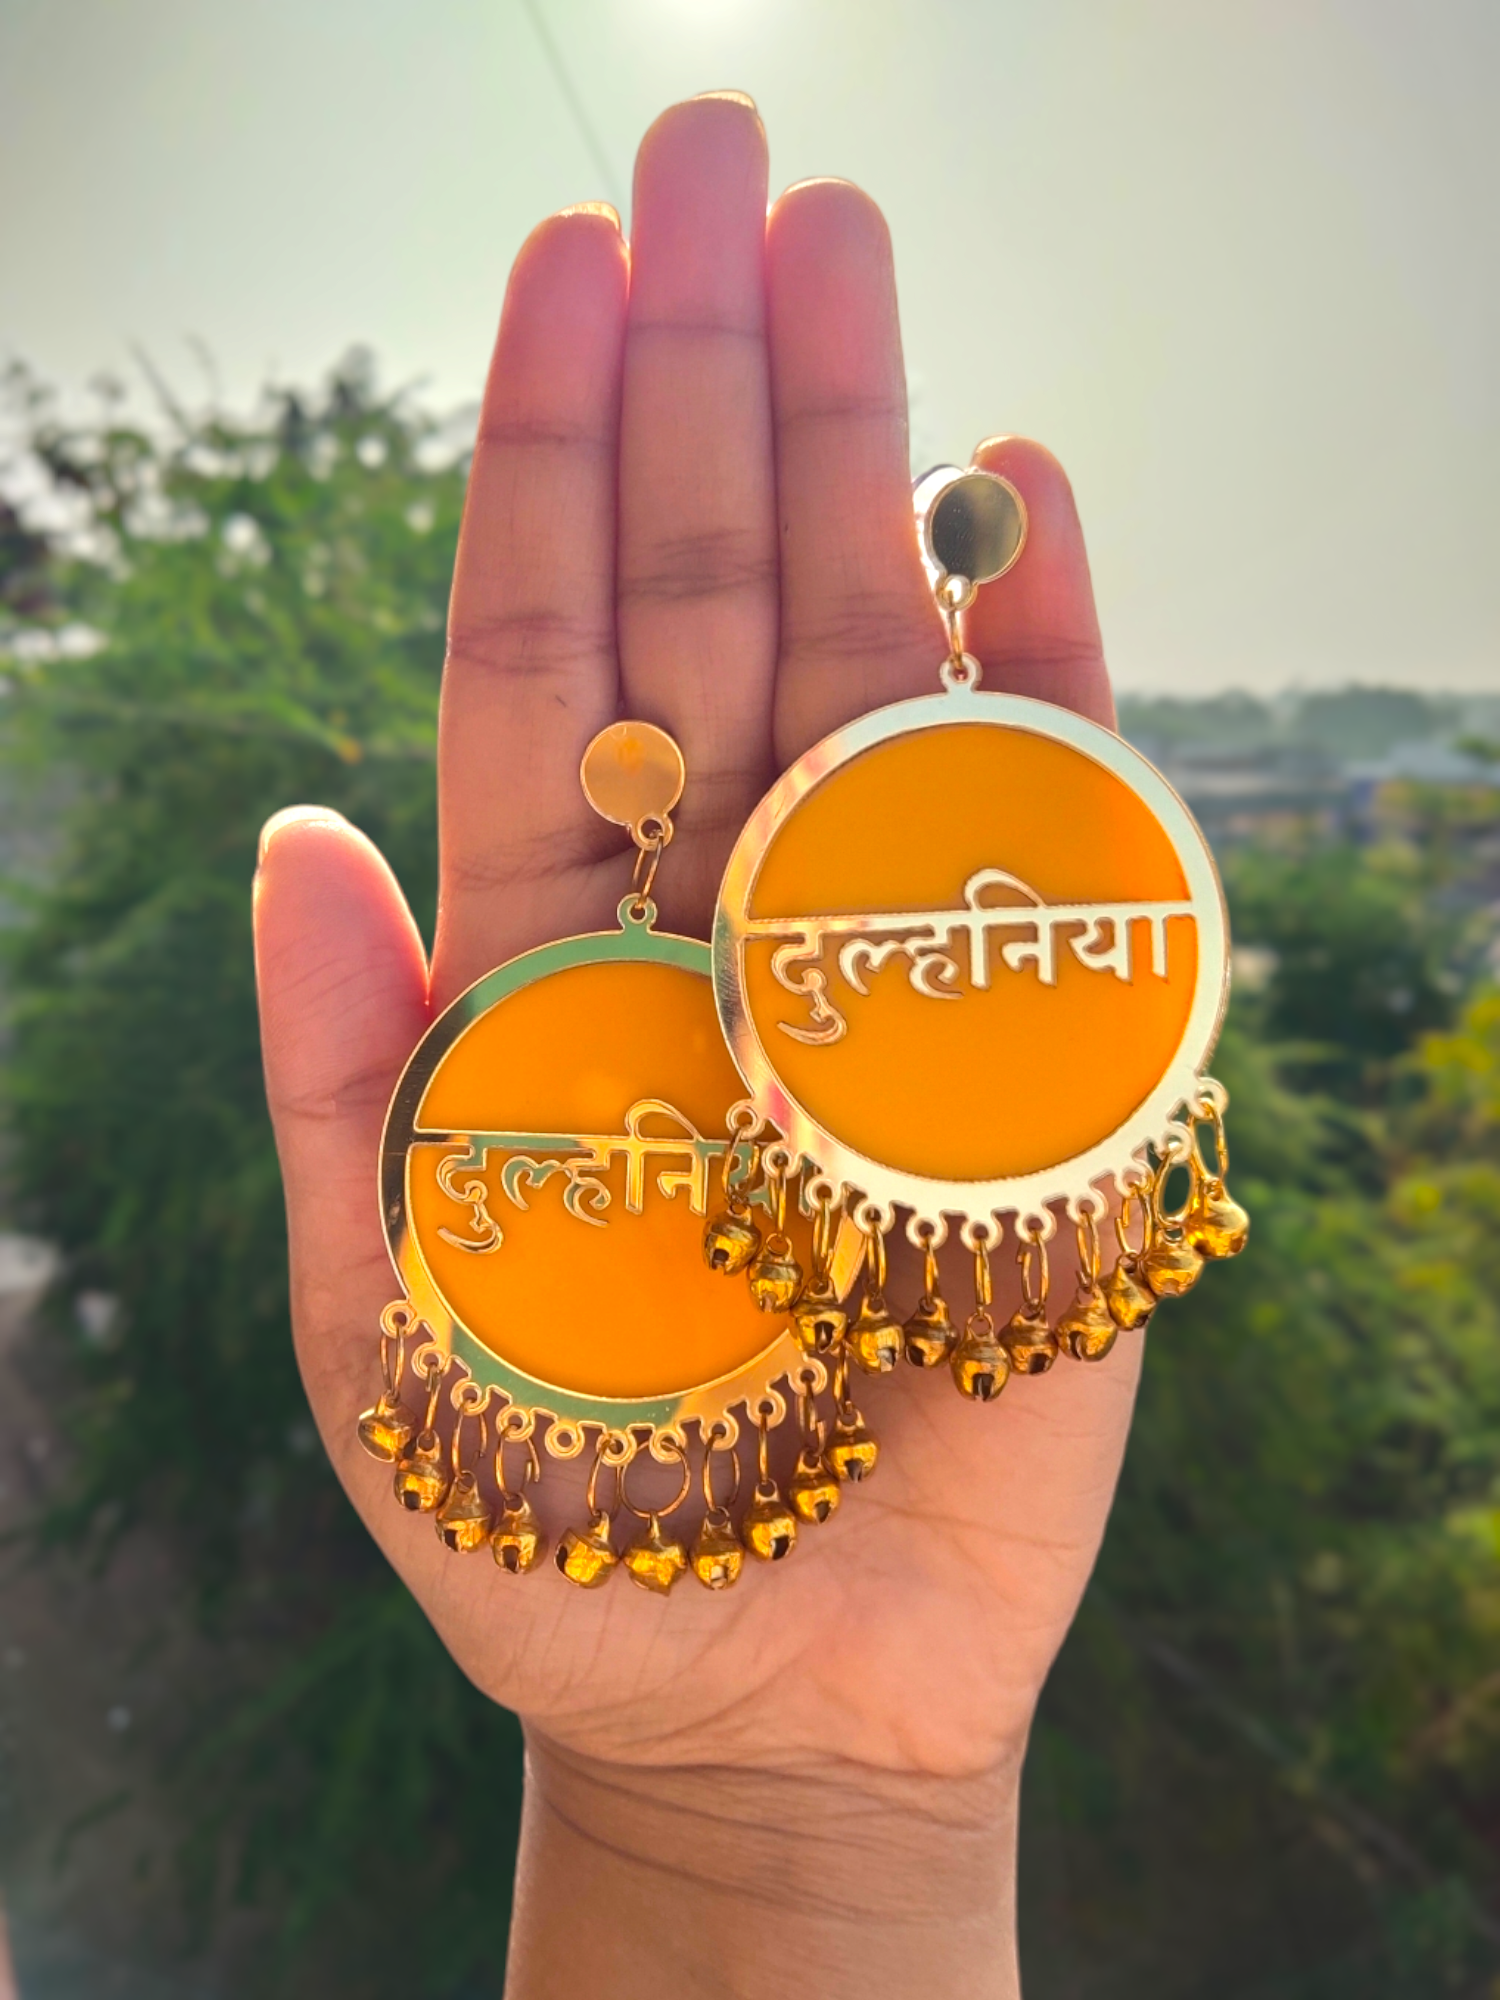 Dulhaniya Earrings for Haldi, Mehndi. Dulhaniya text written in earrings in yellow color